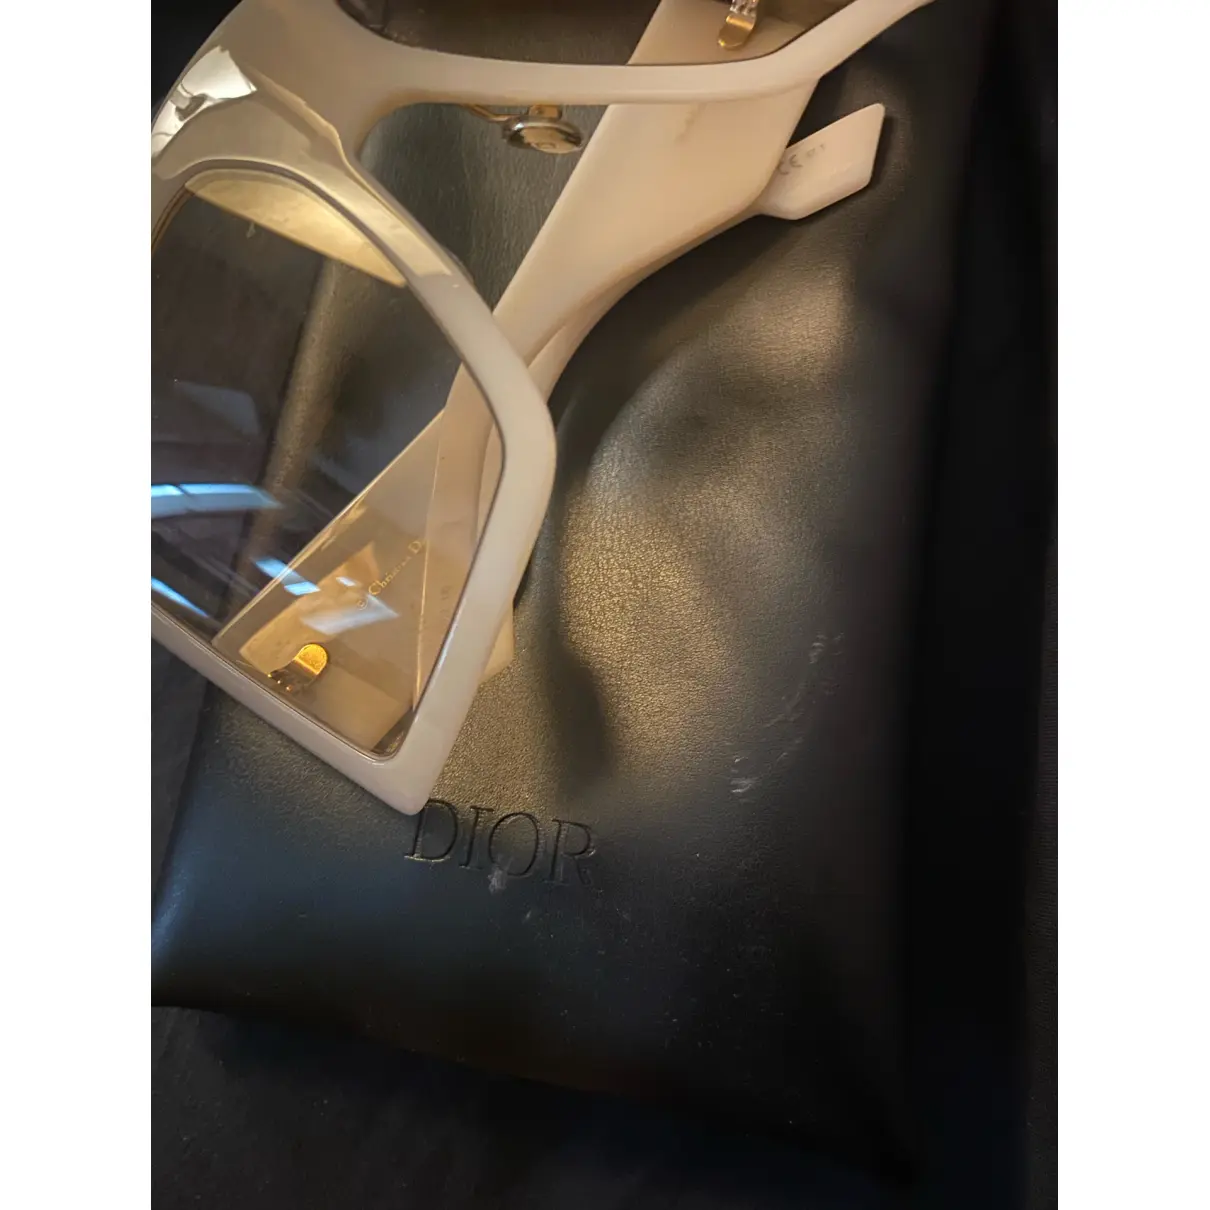 Buy Dior DiorSolight1 goggle glasses online